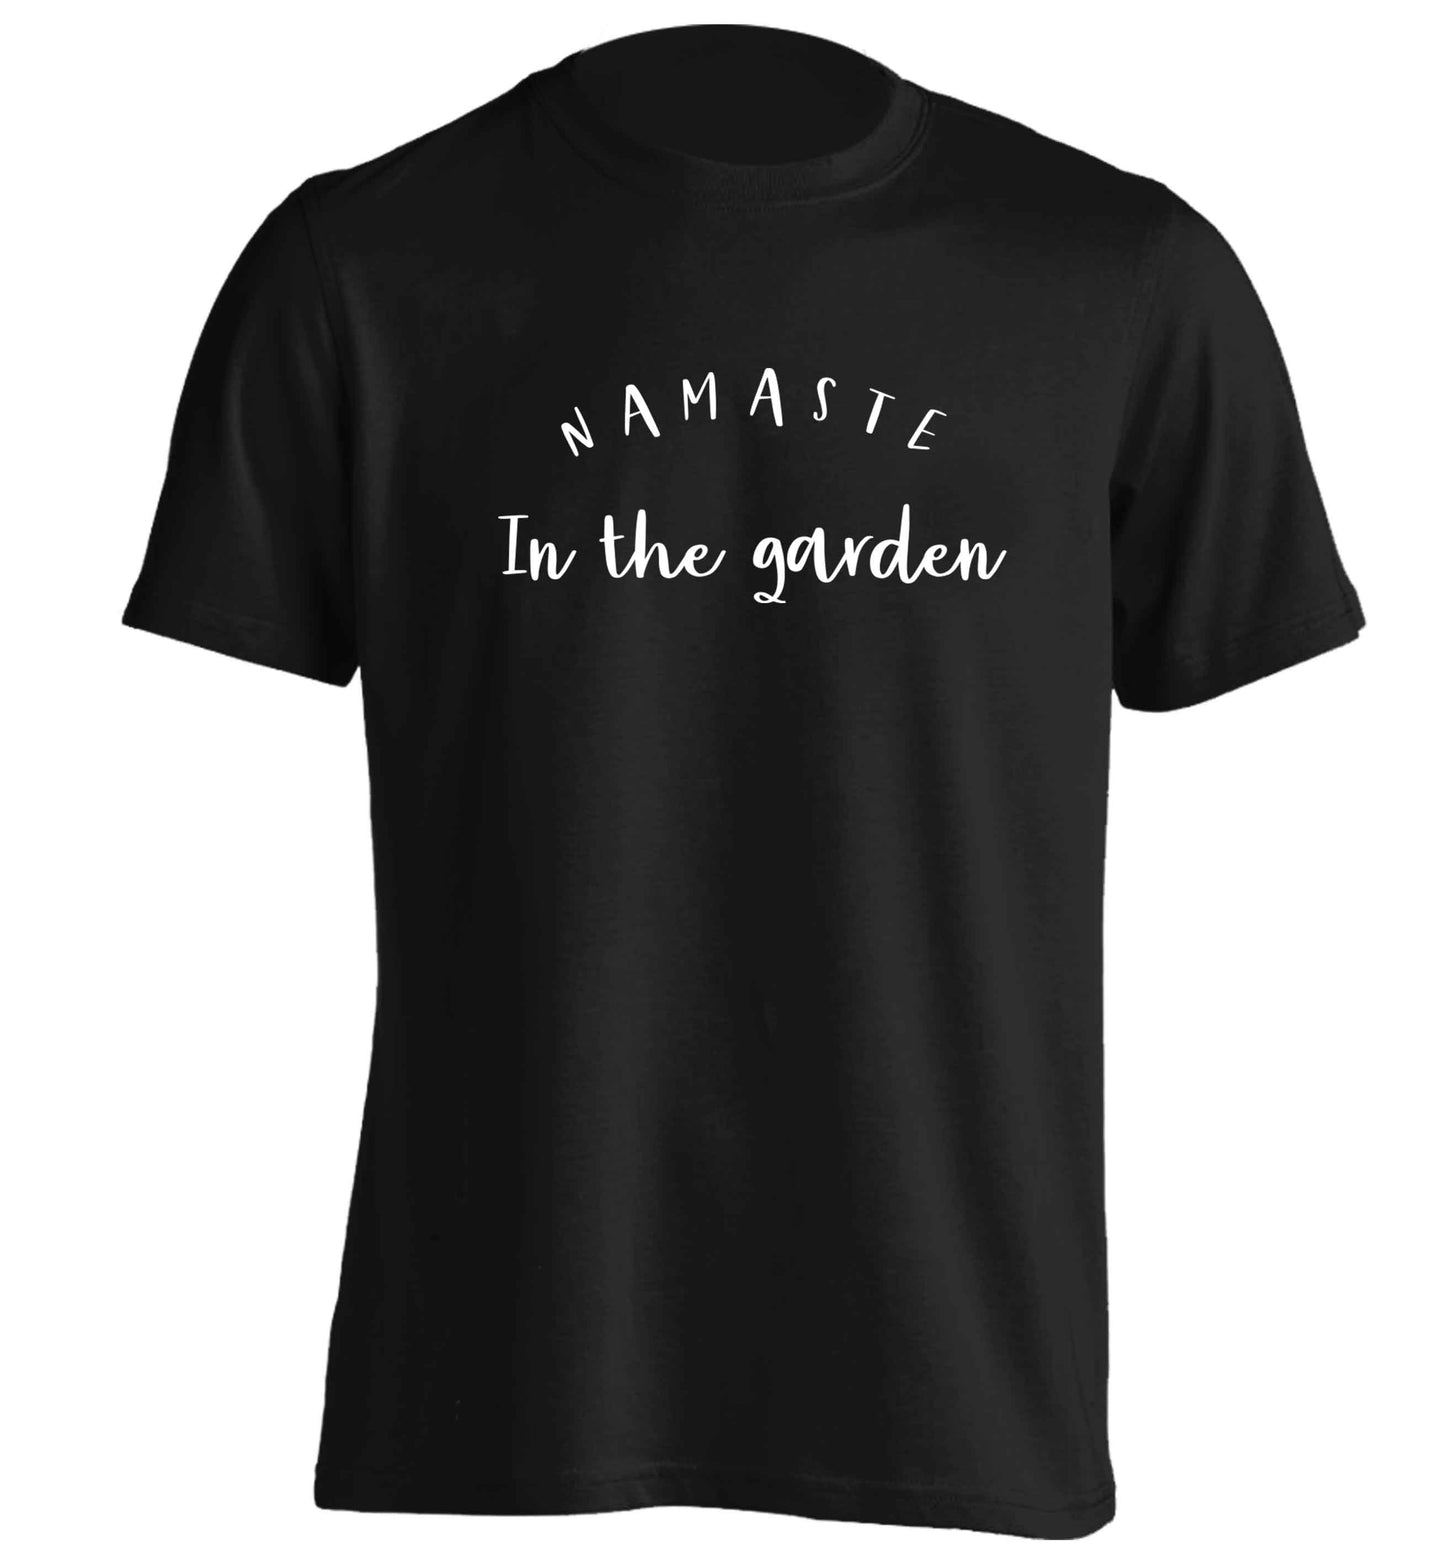 Namaste in the garden adults unisex black Tshirt 2XL